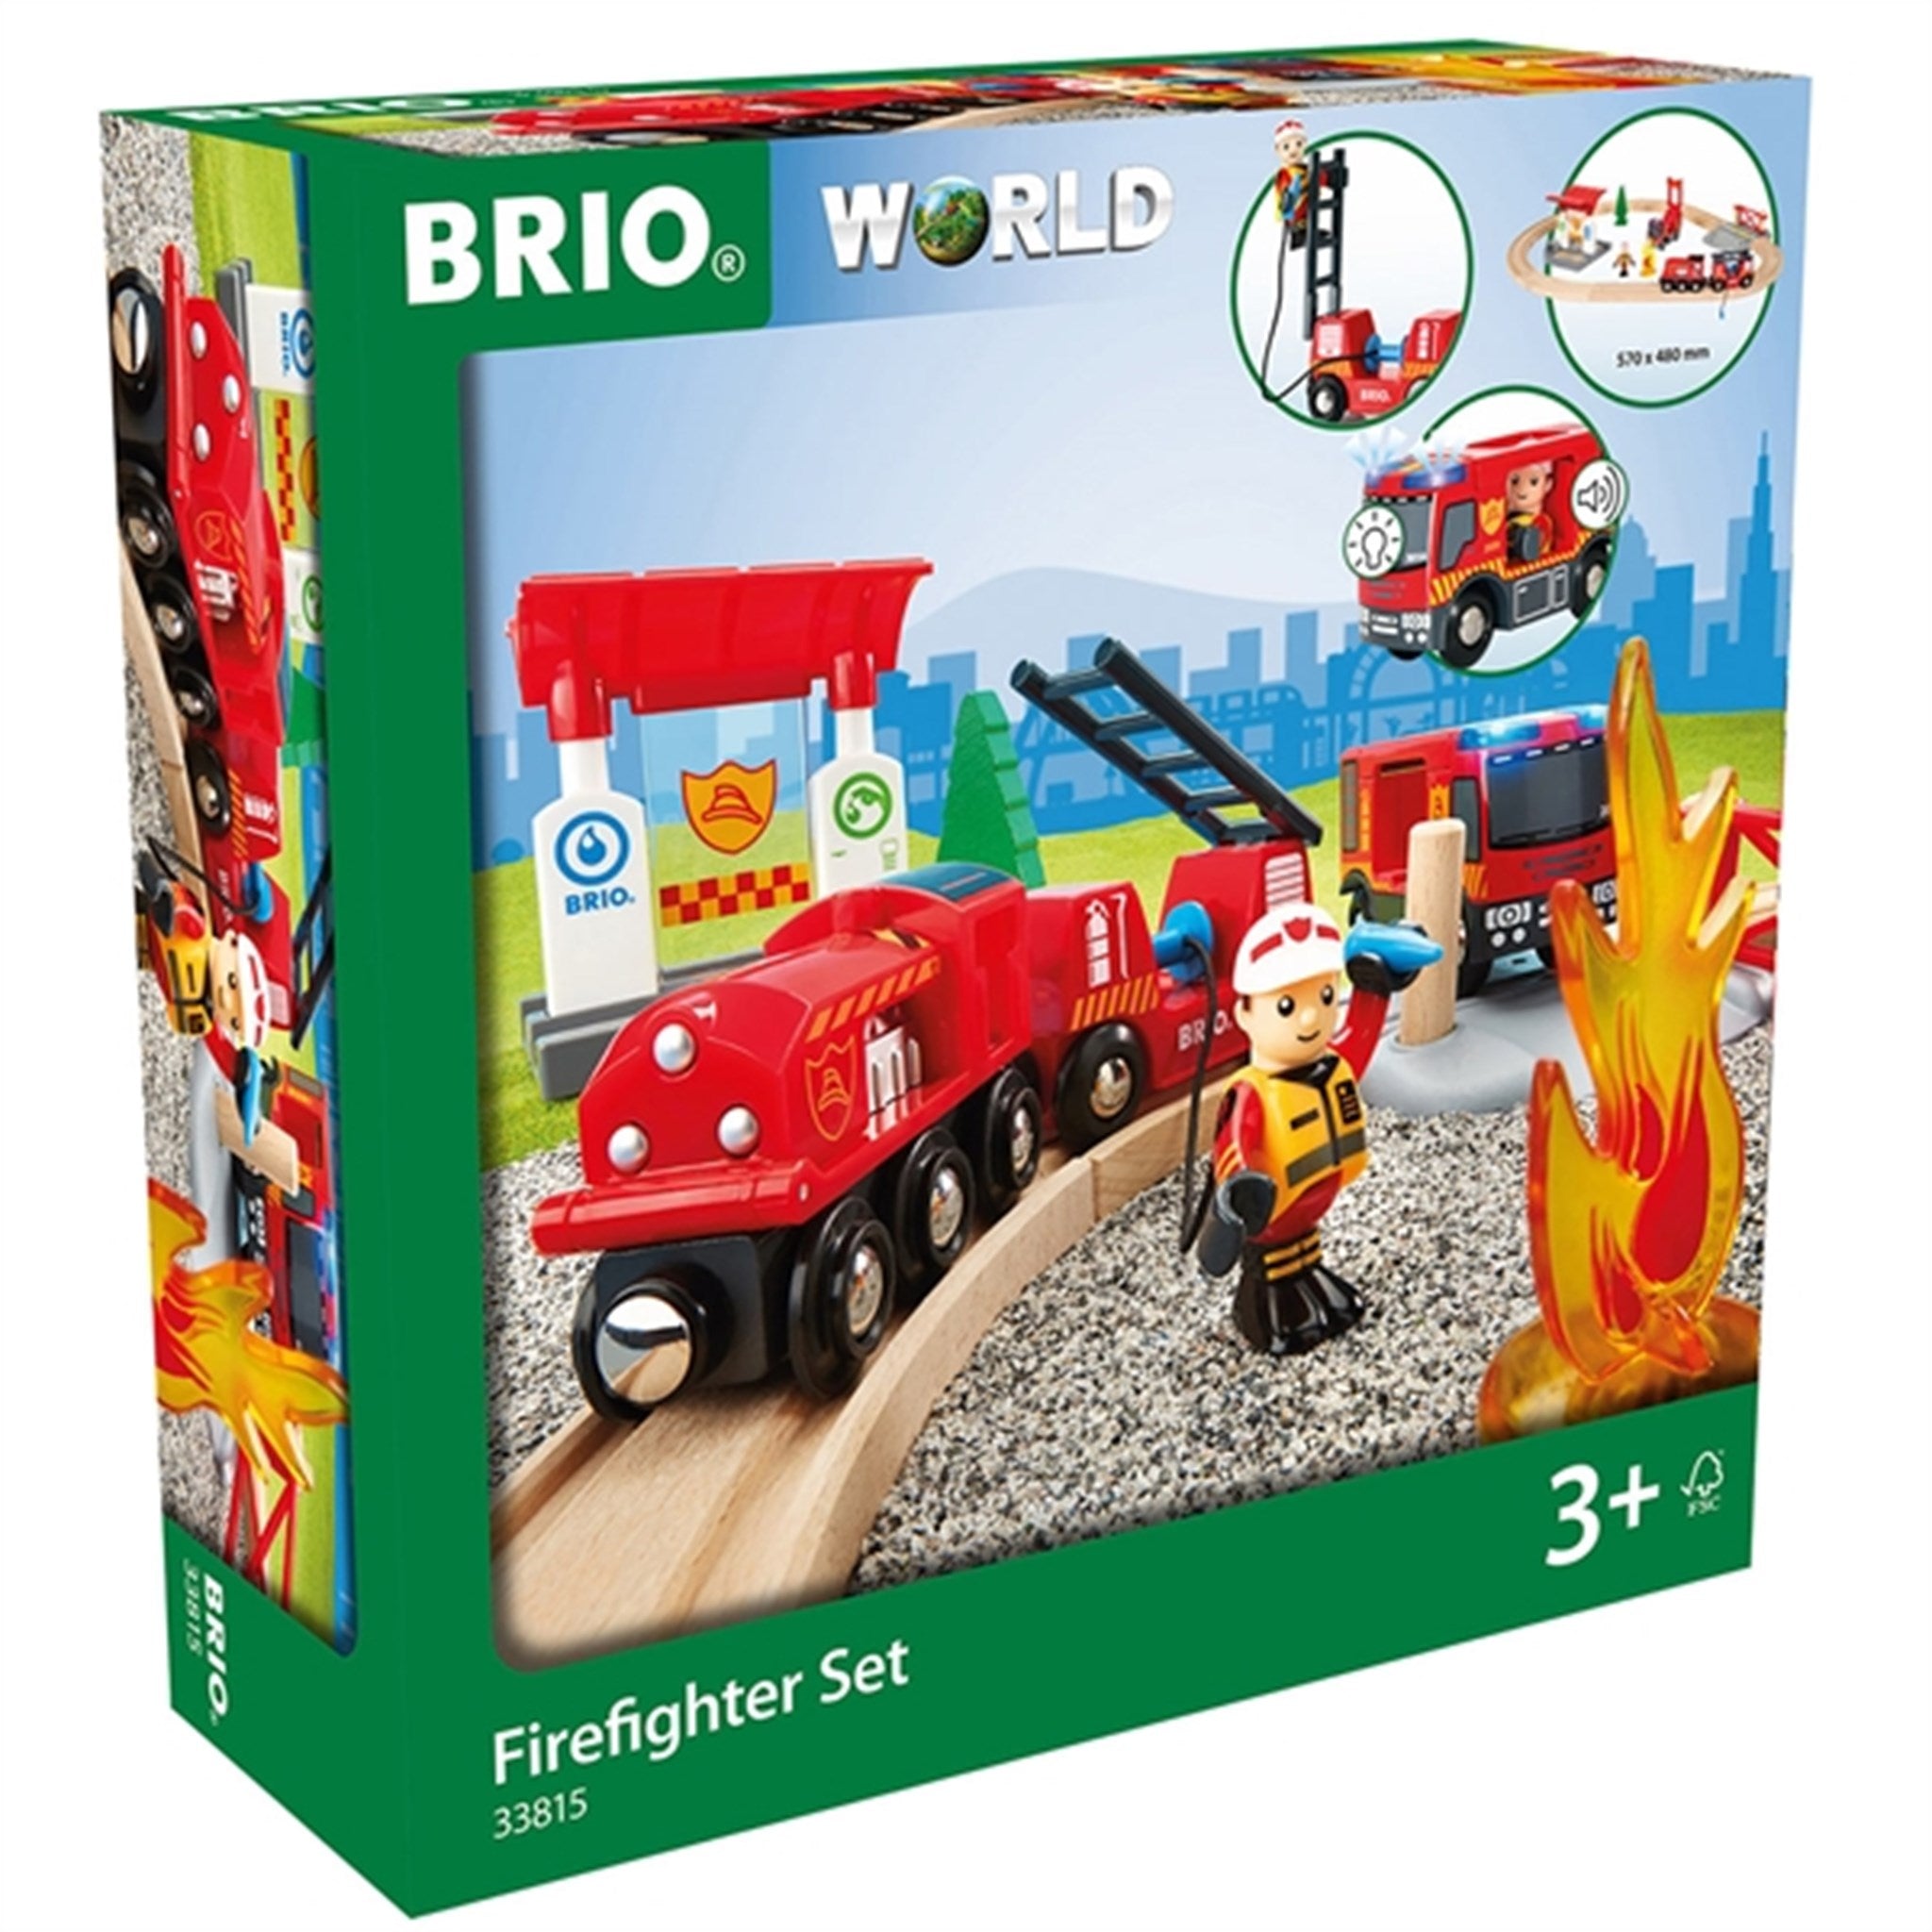 BRIO® Firefighter Set 2